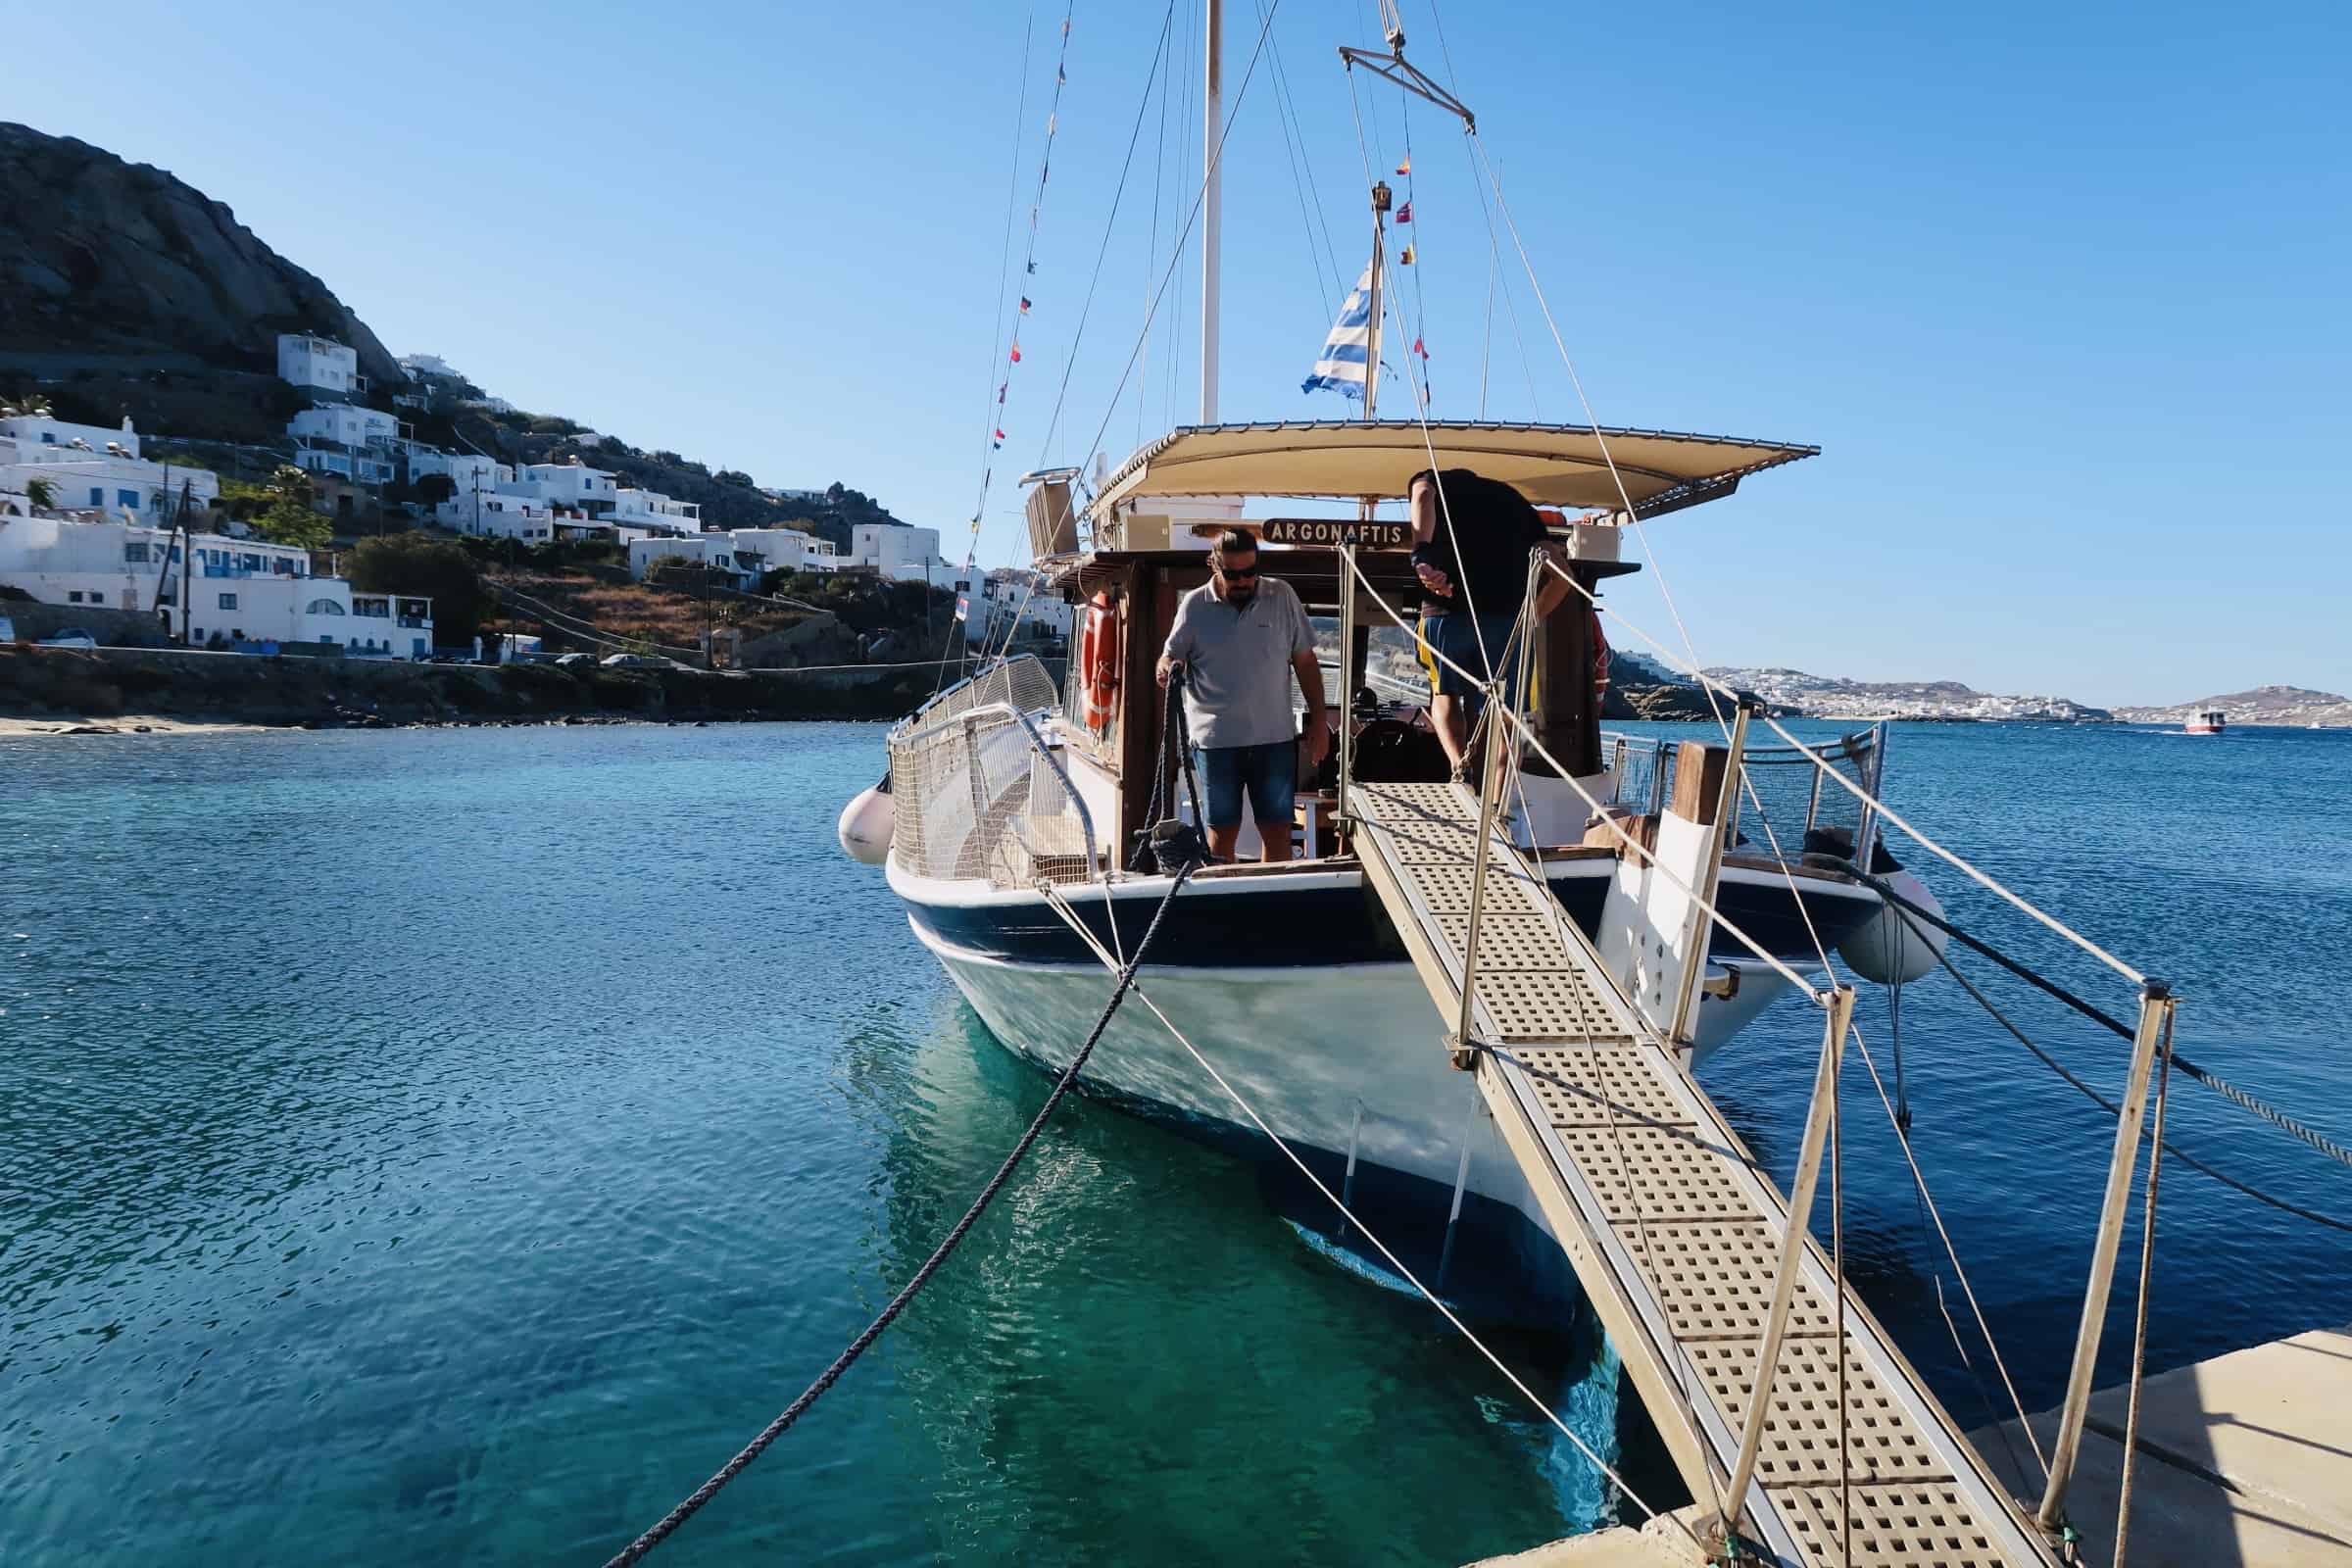 Taking a boat from Mykonos to Delos